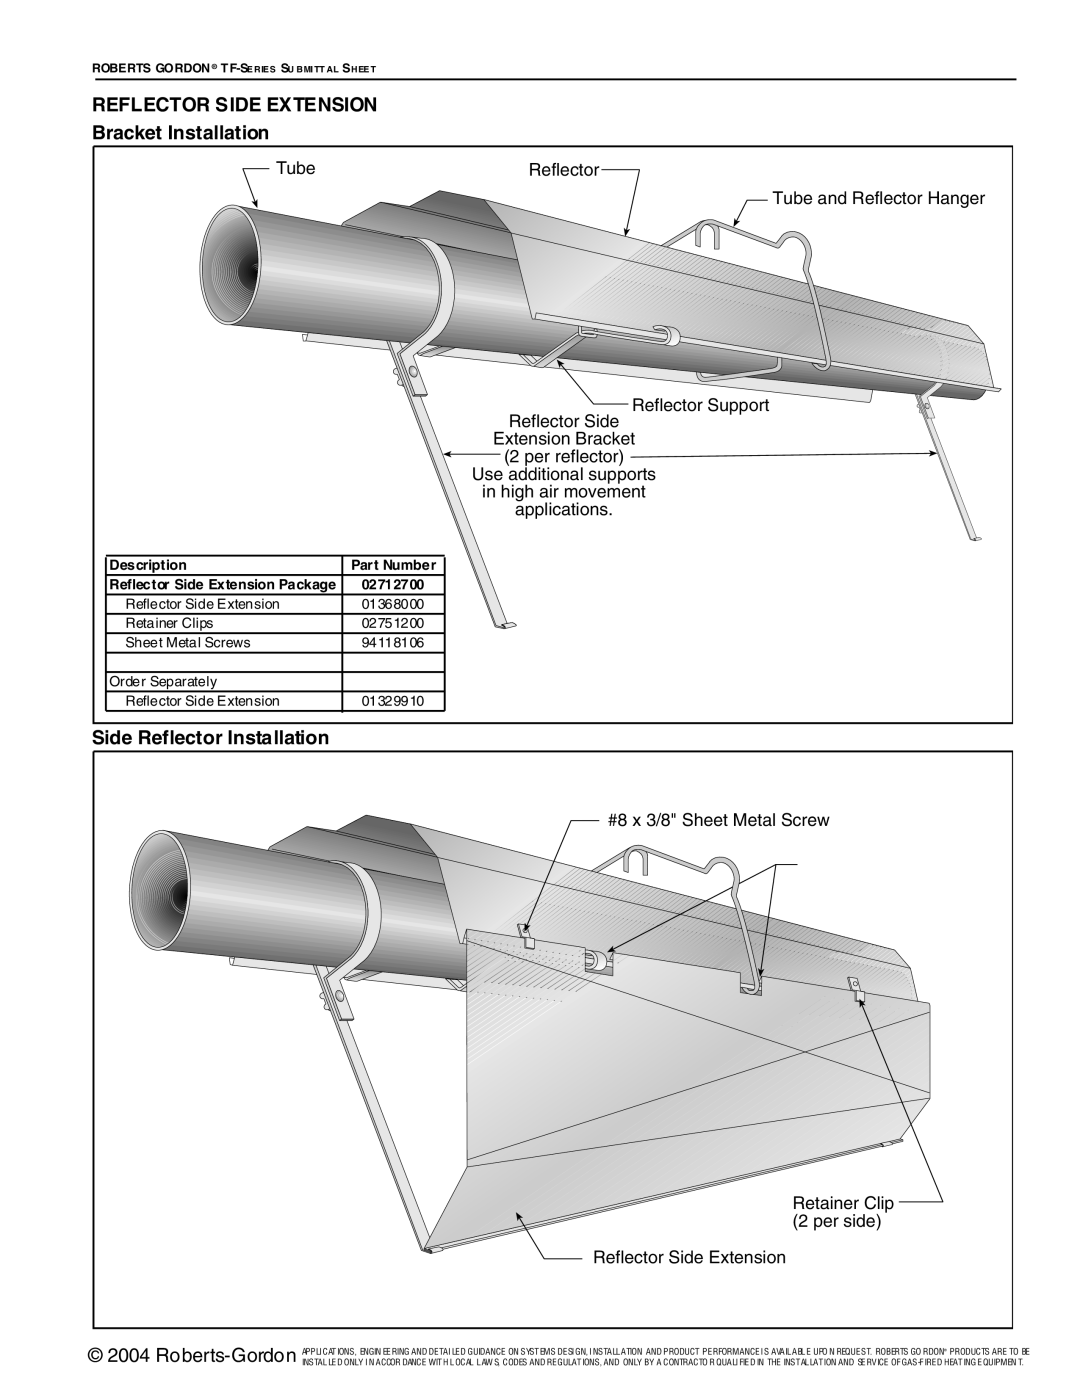 Roberts Gorden TF-Series service manual Reflector Side Extension, Bracket Installation, Side Reflector Installation 